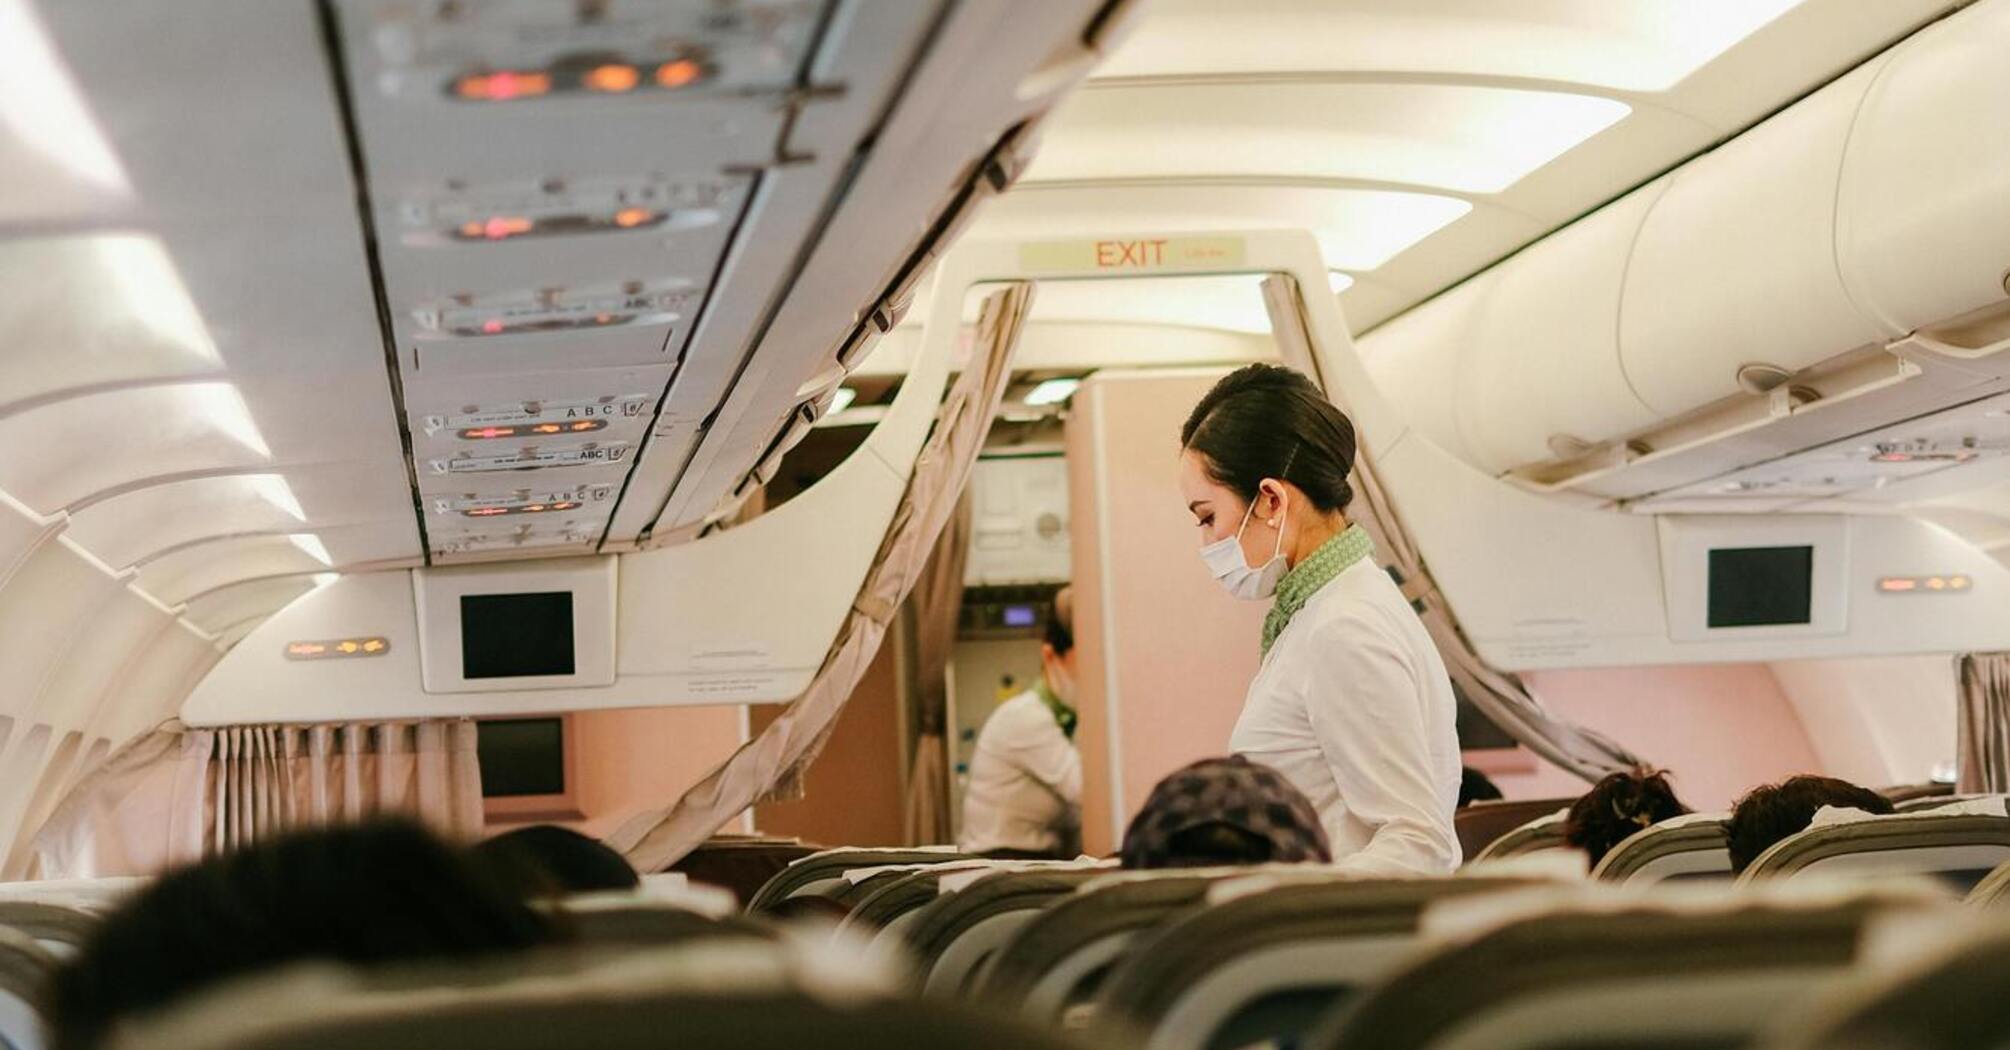 Nearly free upgrade: flight attendants debunk popular TikTok advice